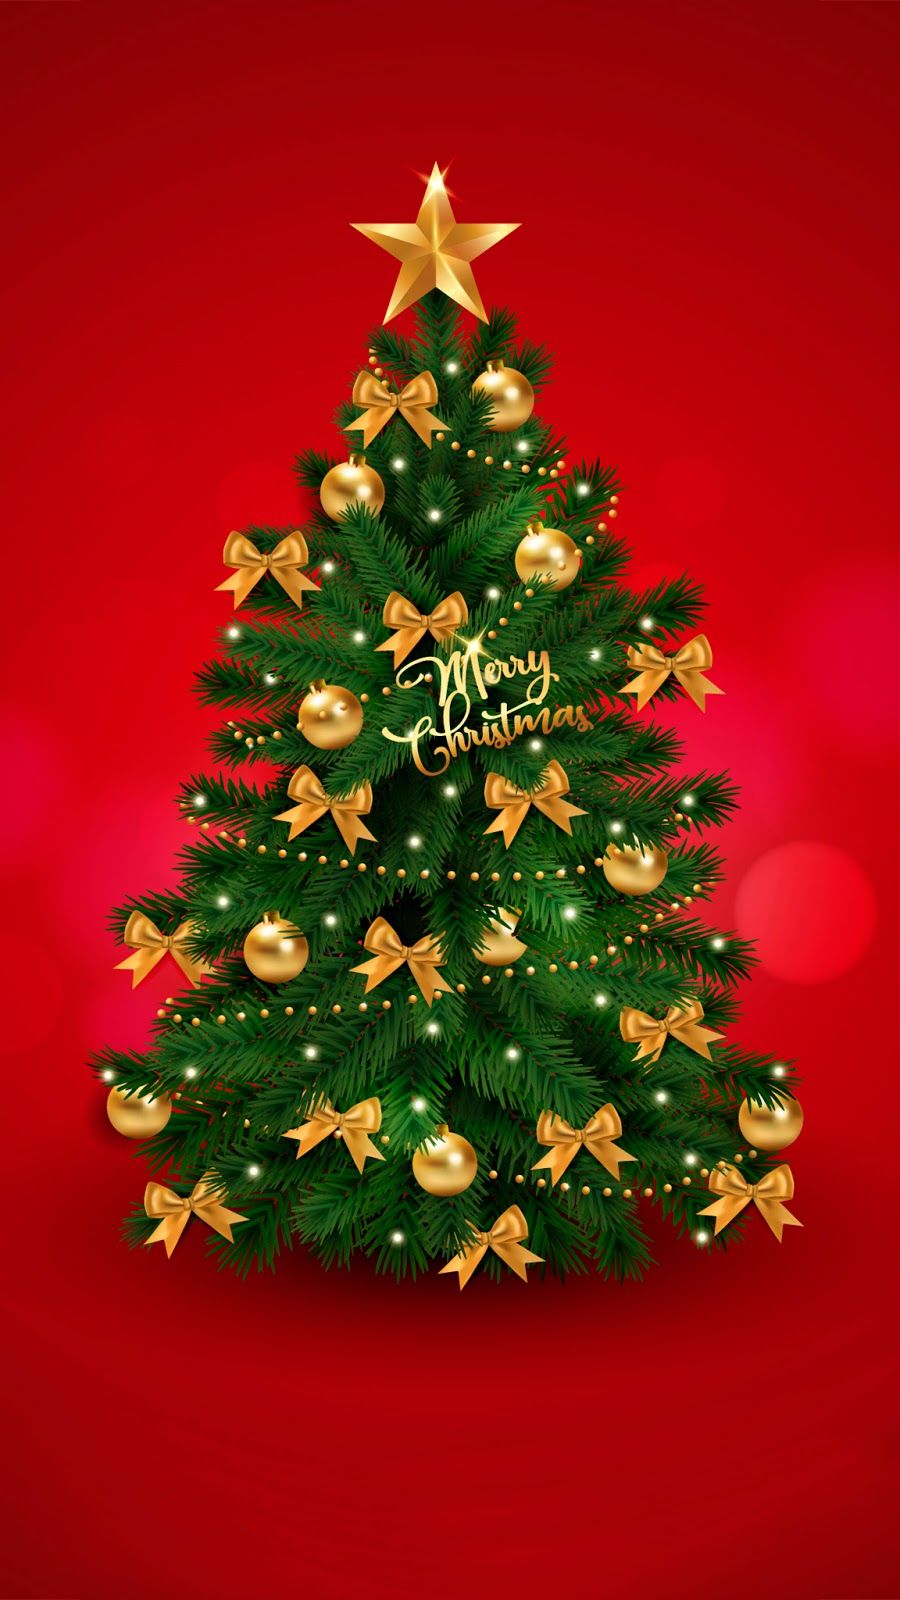 Christmas tree wallpaper phone merry christmas images realistic christmas trees merry christmas wishes